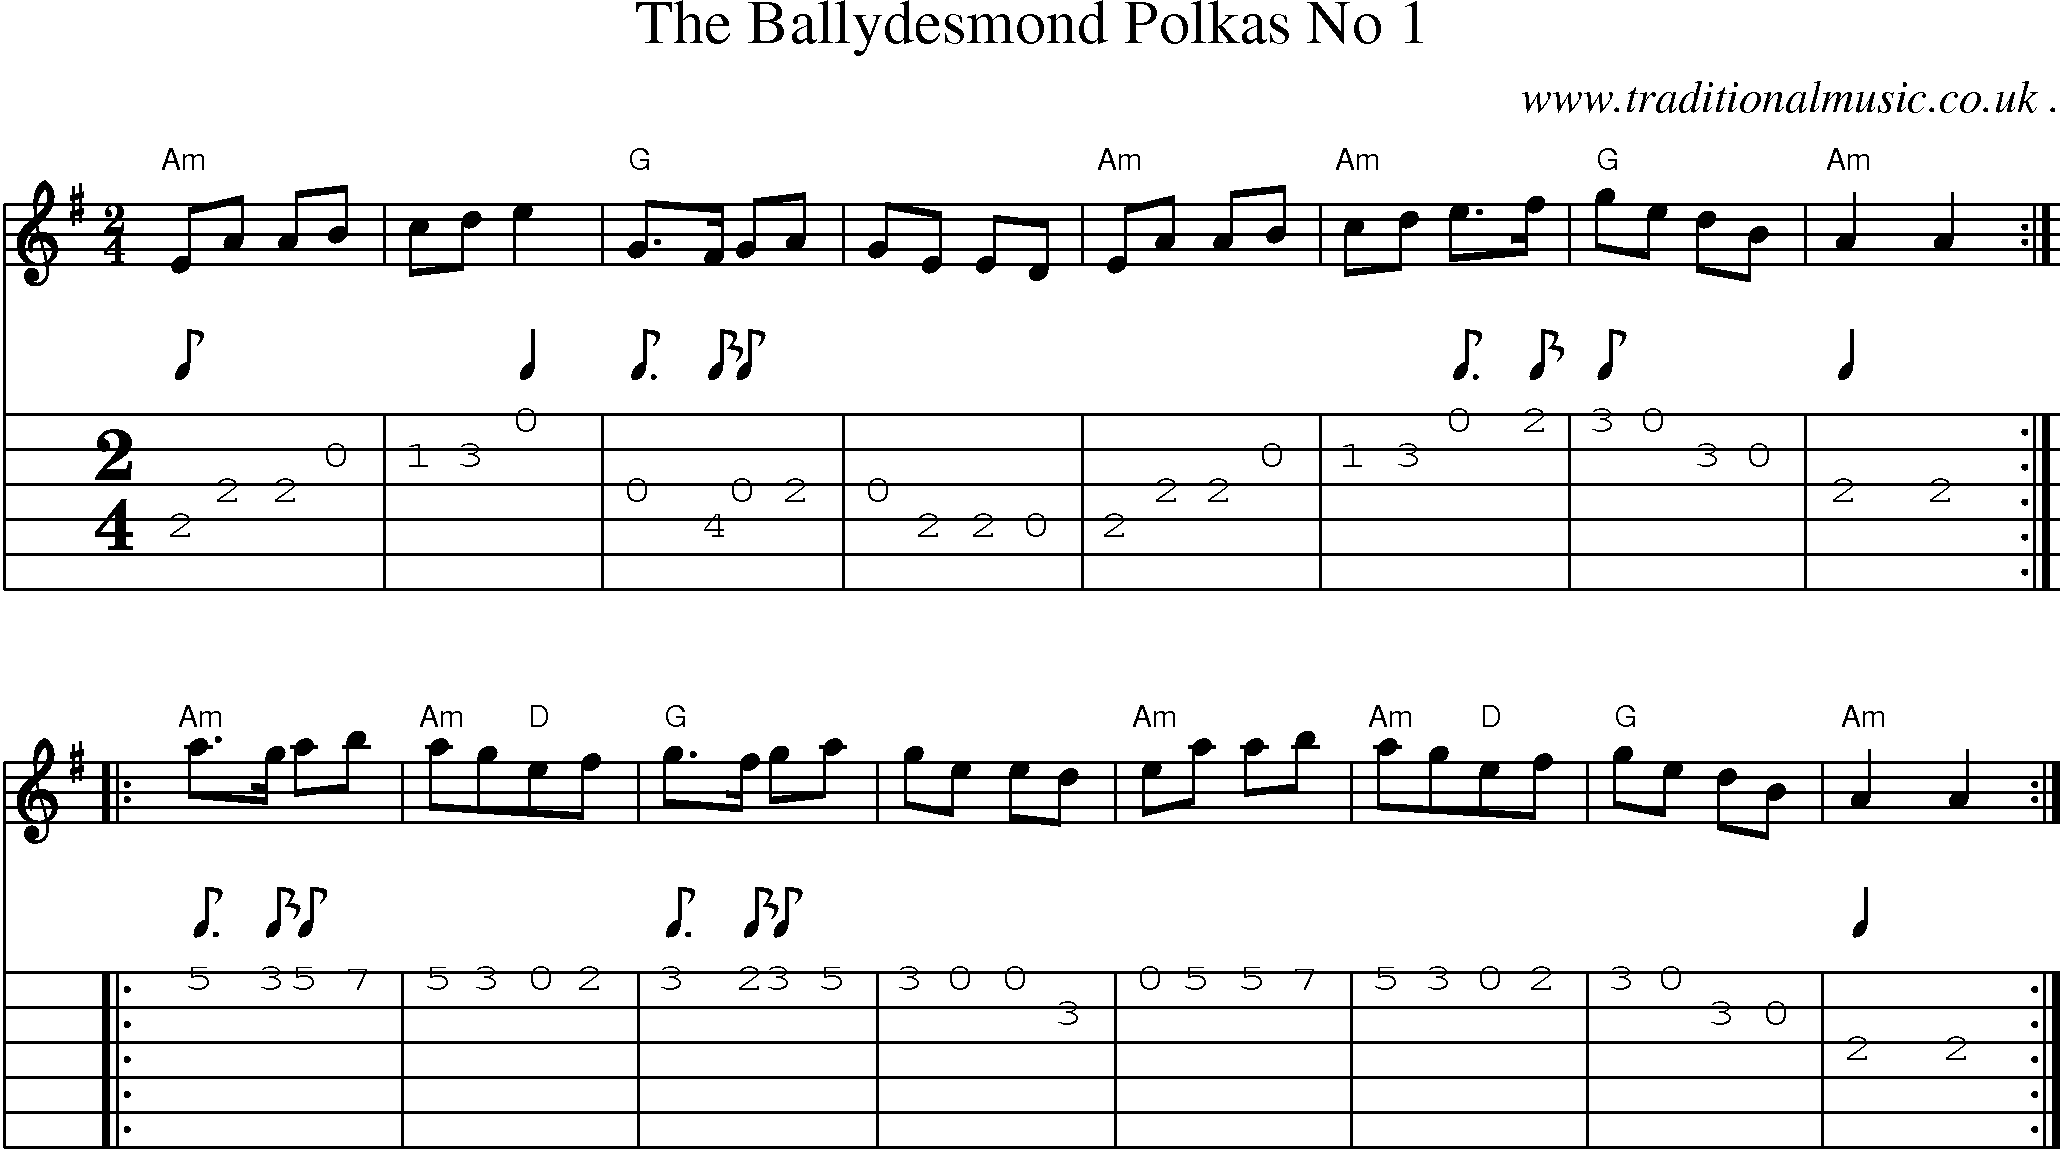 Sheet-Music and Guitar Tabs for The Ballydesmond Polkas No 1